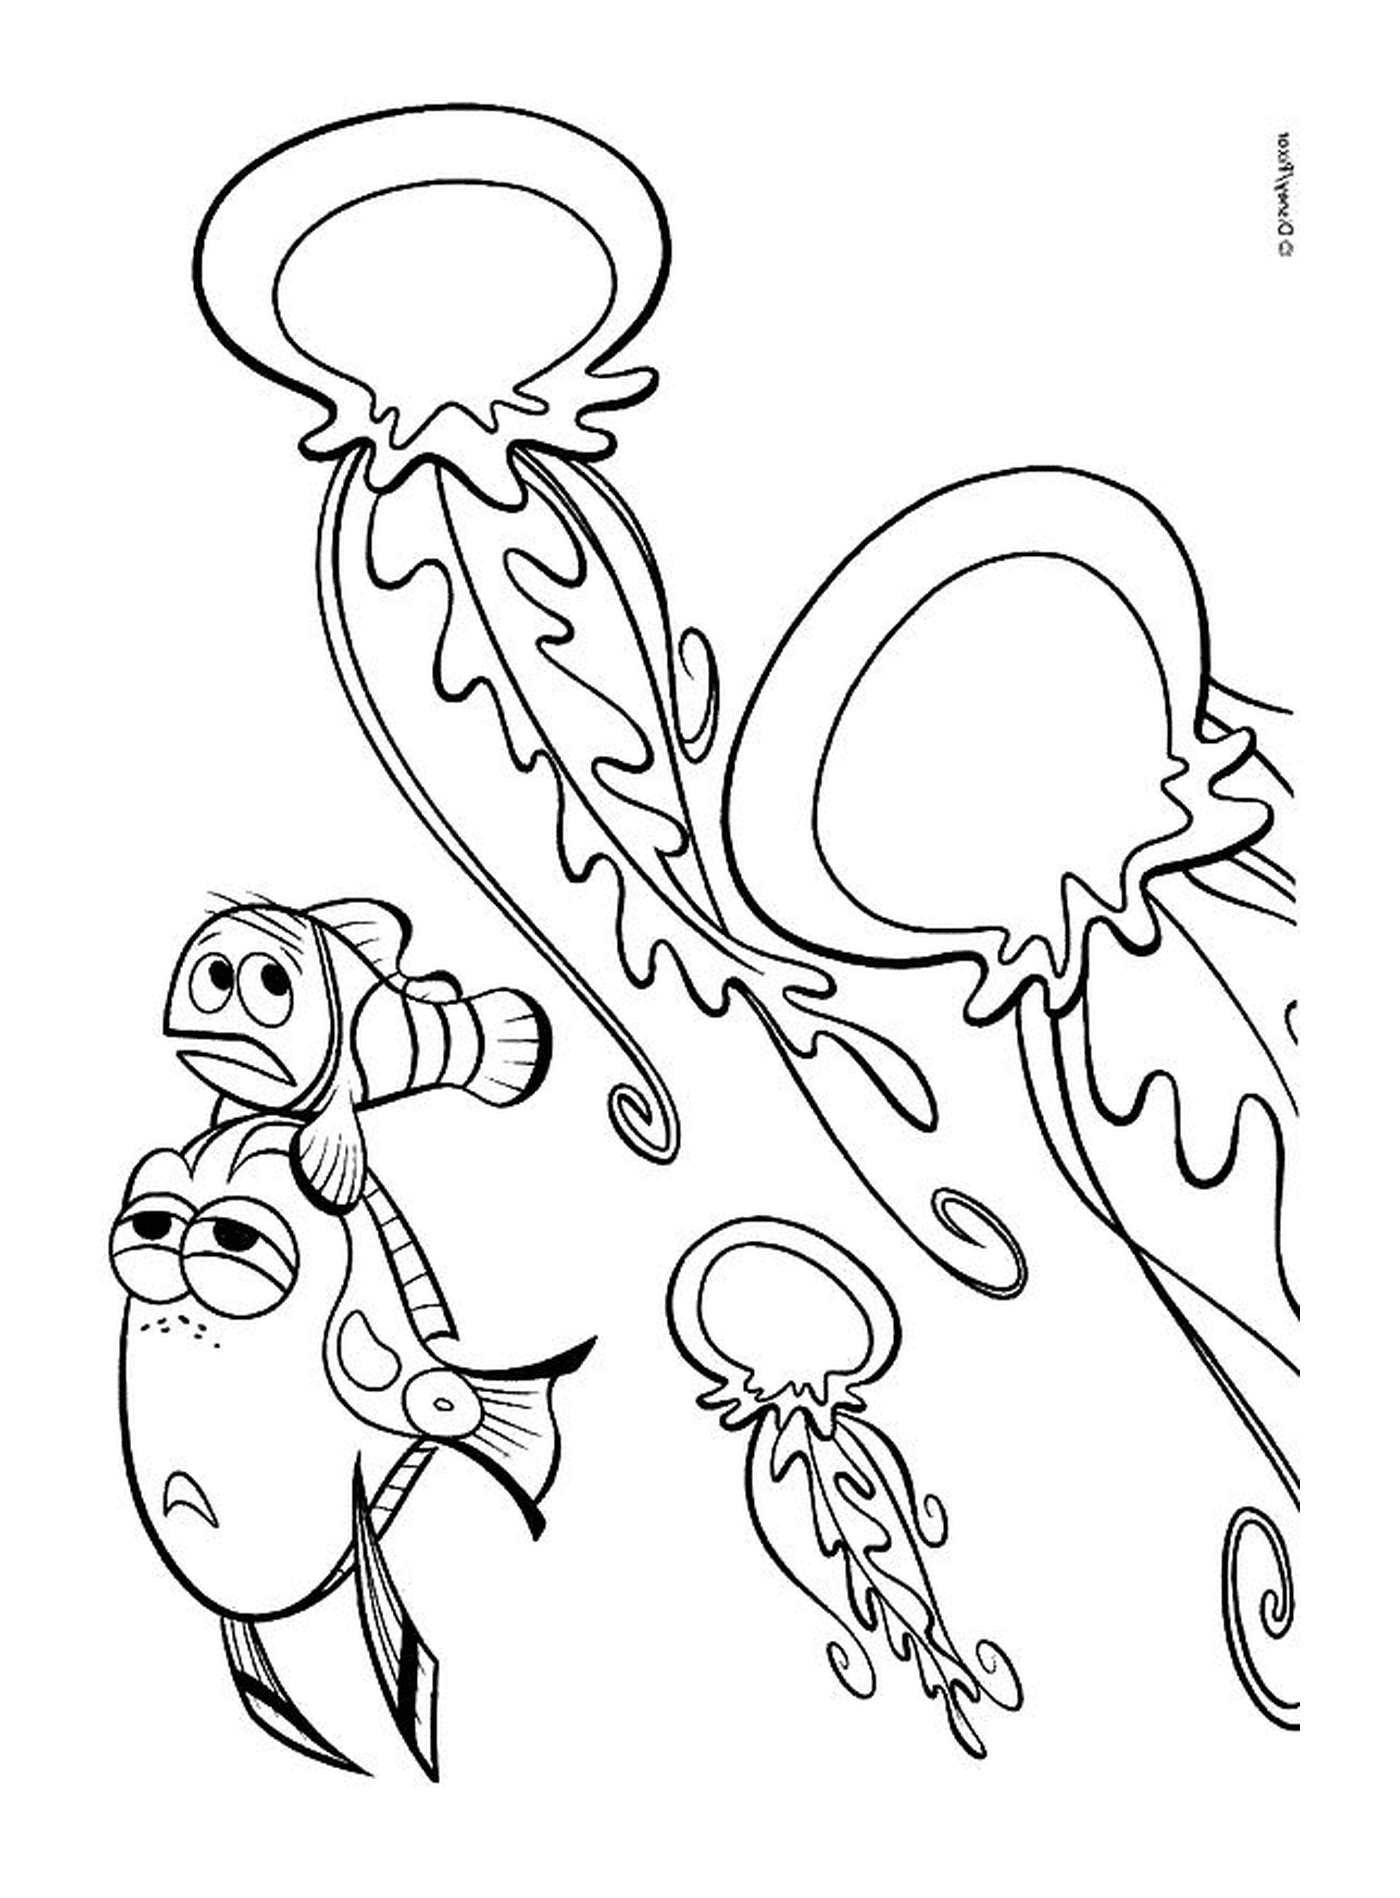  Марин и Дори среди медузы 